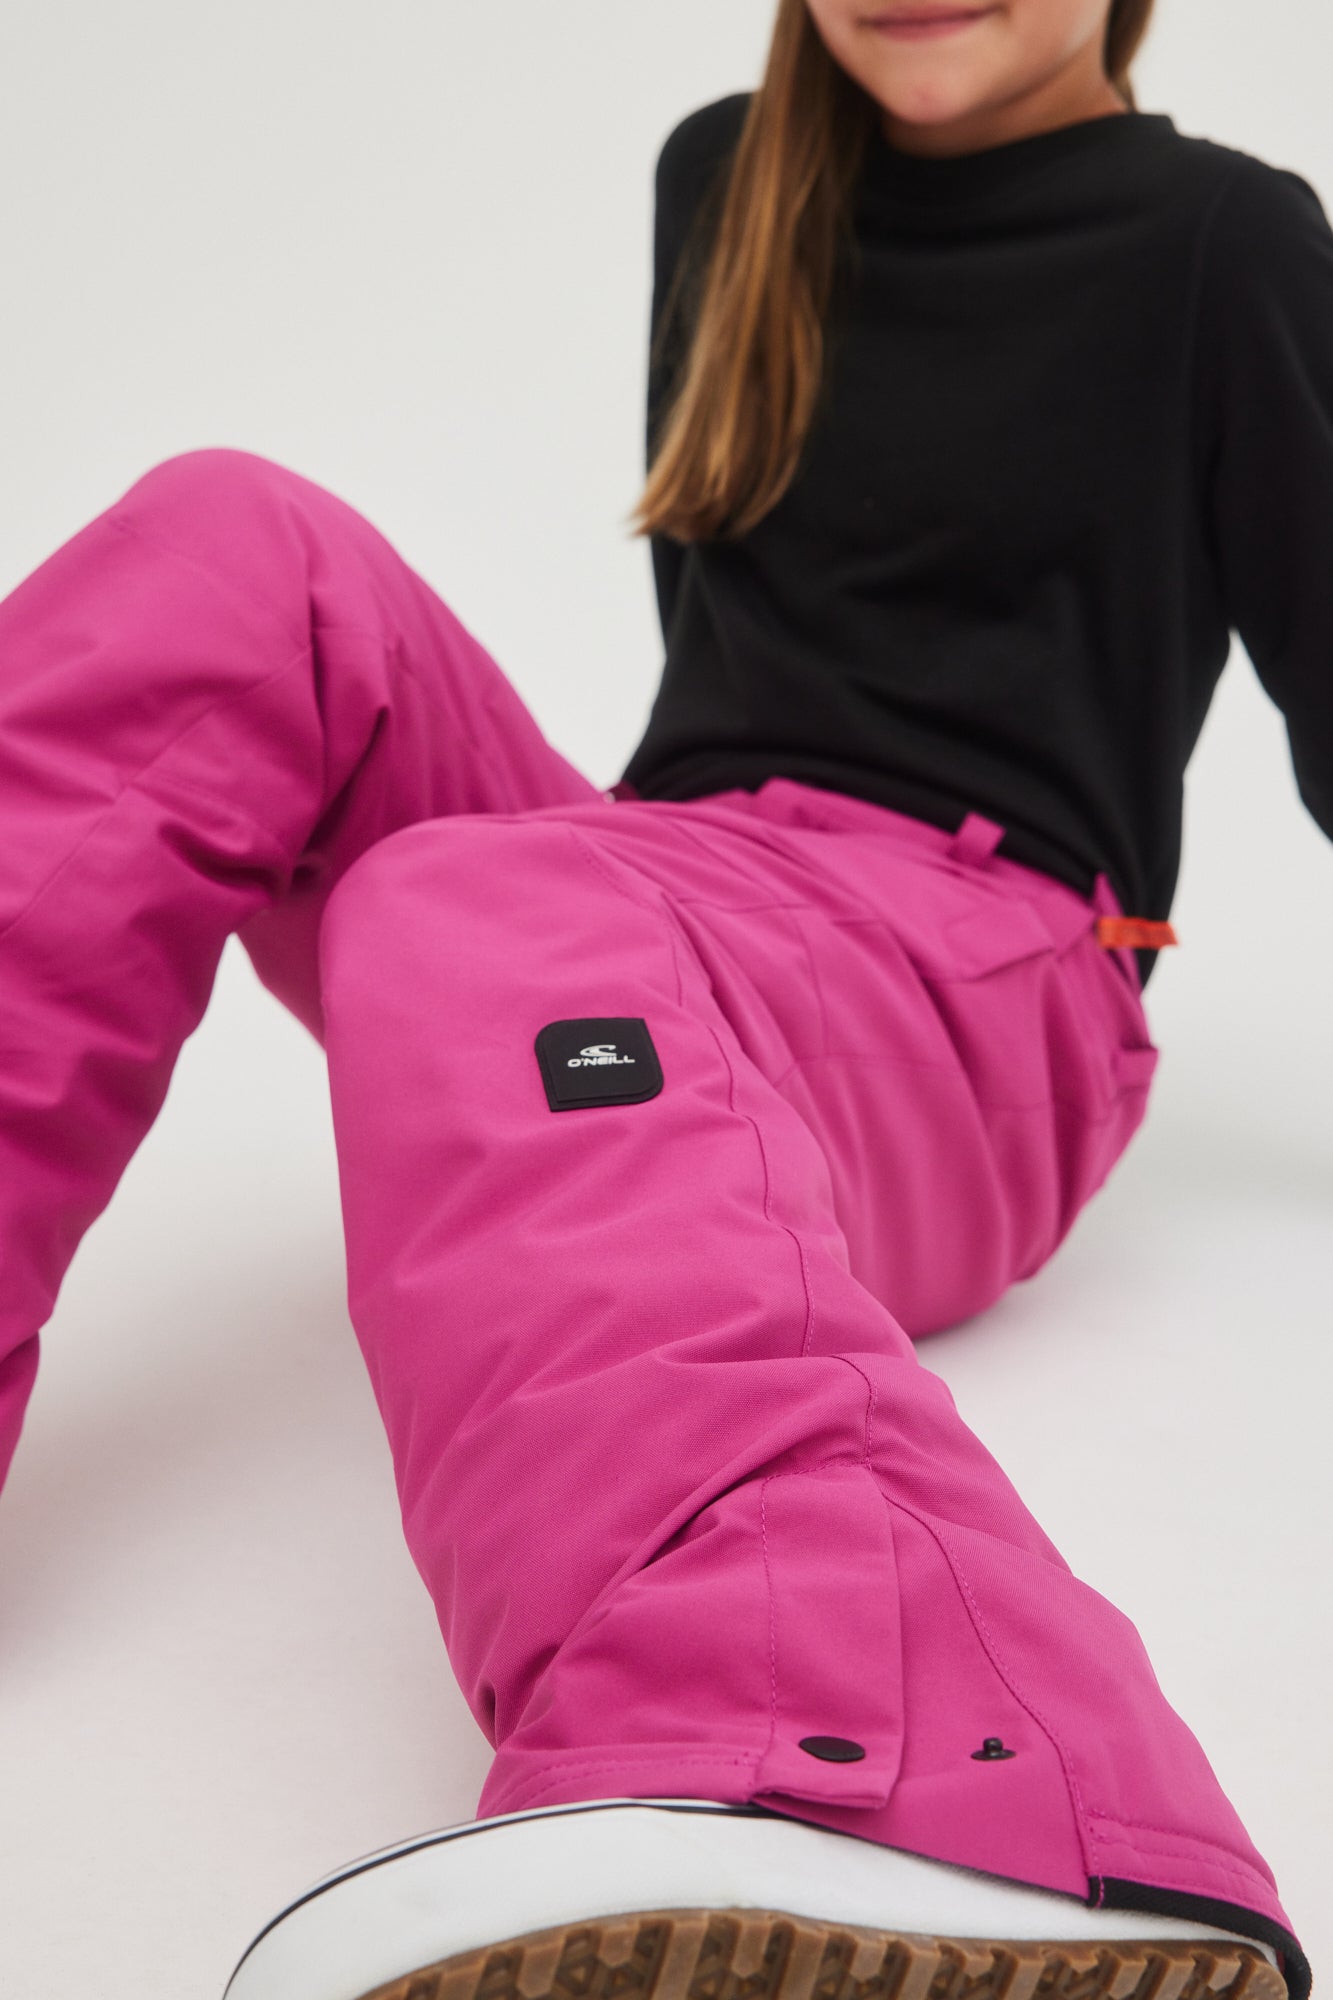 Pantalon O'NEILL Chromed - Ropa and Roll shop online